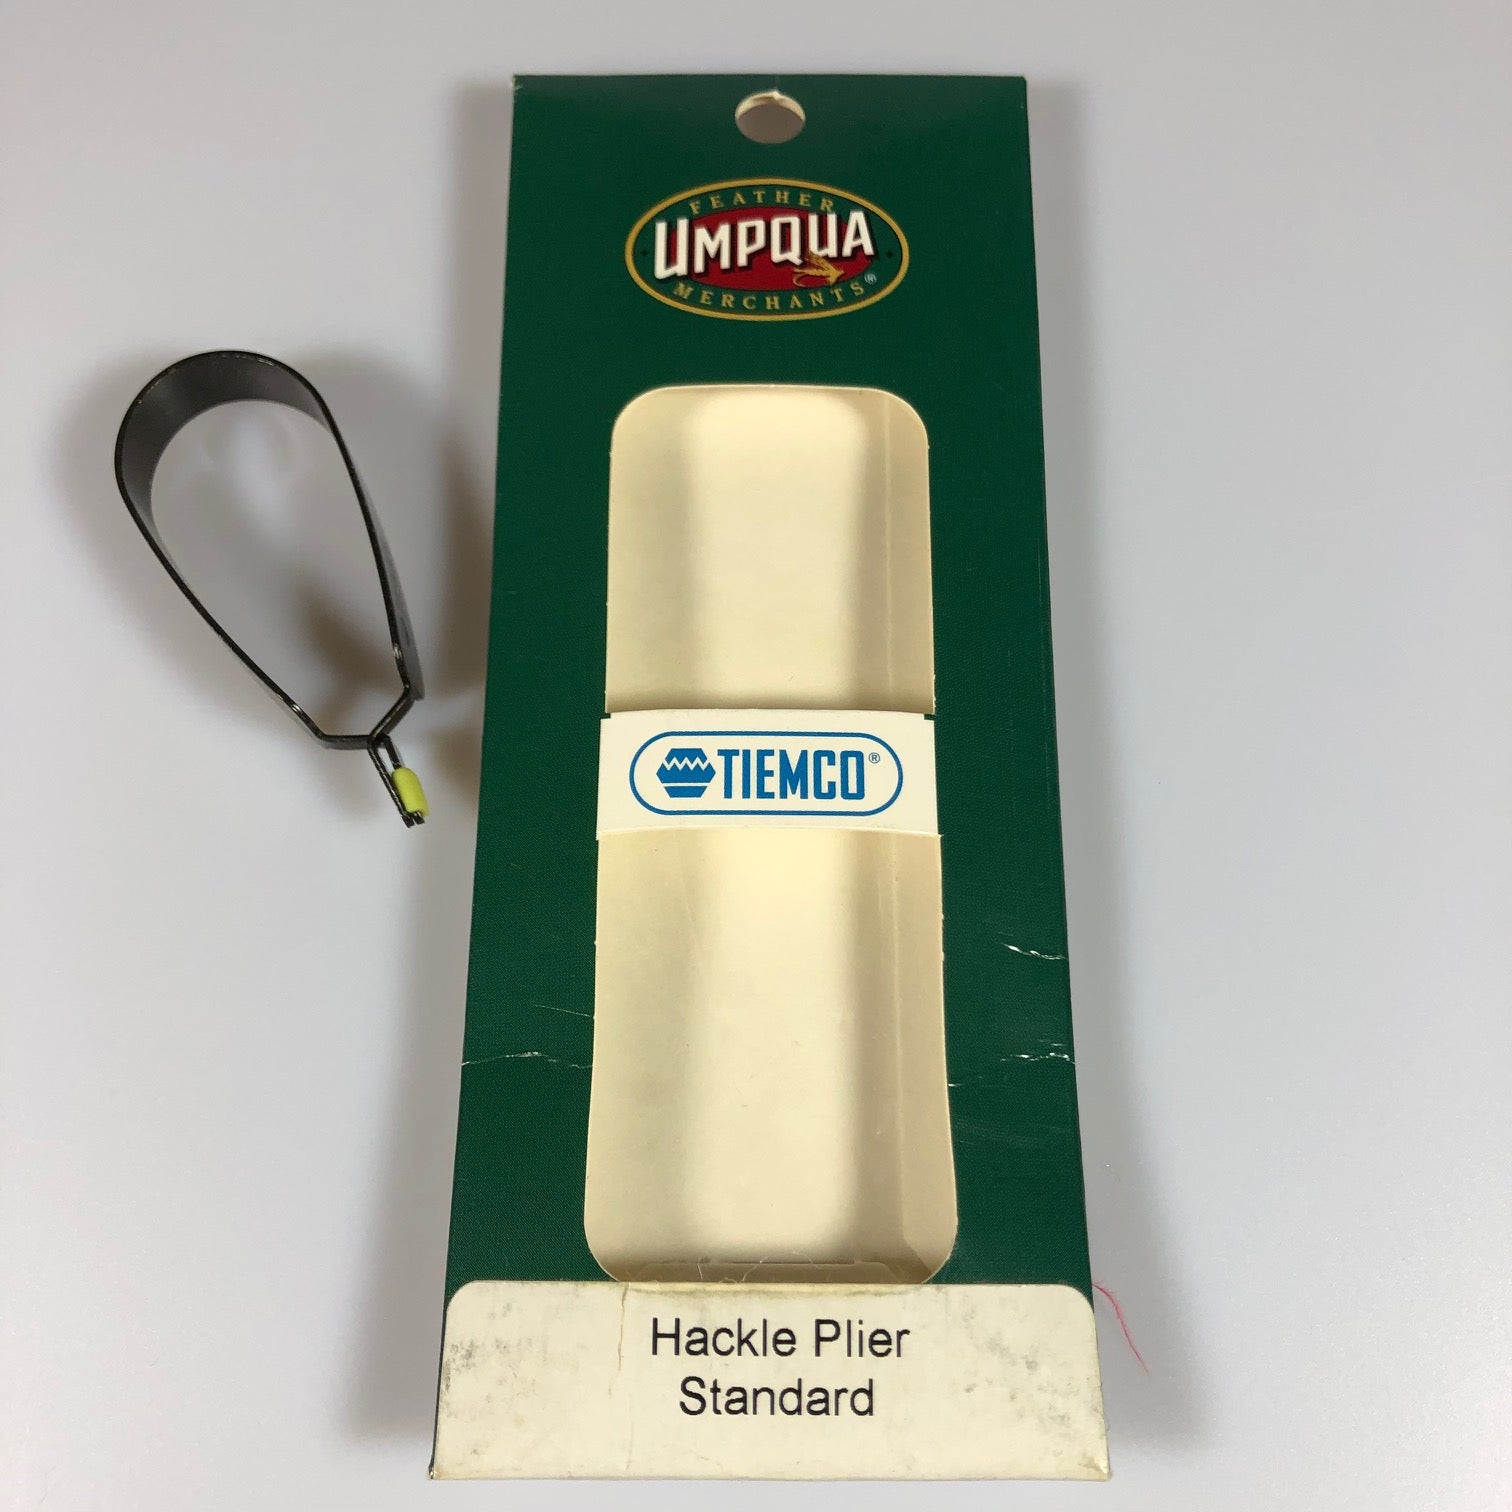 Umpqua (Tiemco) Hackle Plier, Standard